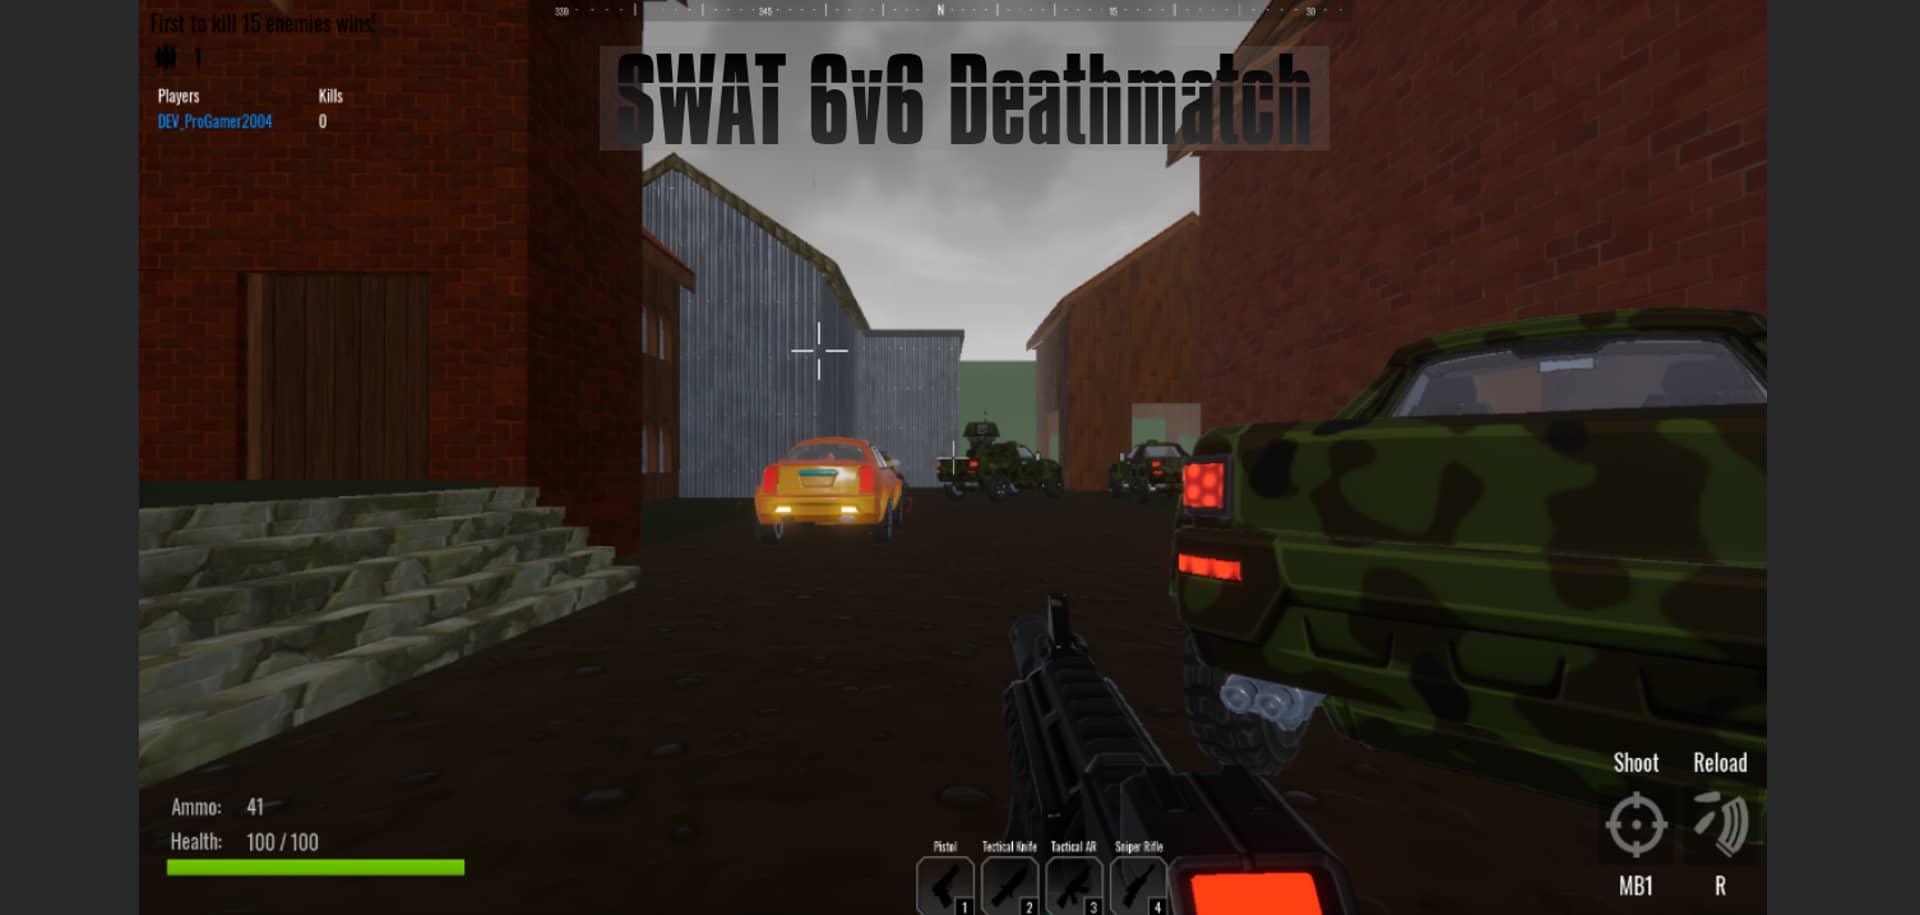 Core SWAT 6v6 Deathmatch Cover-Bild